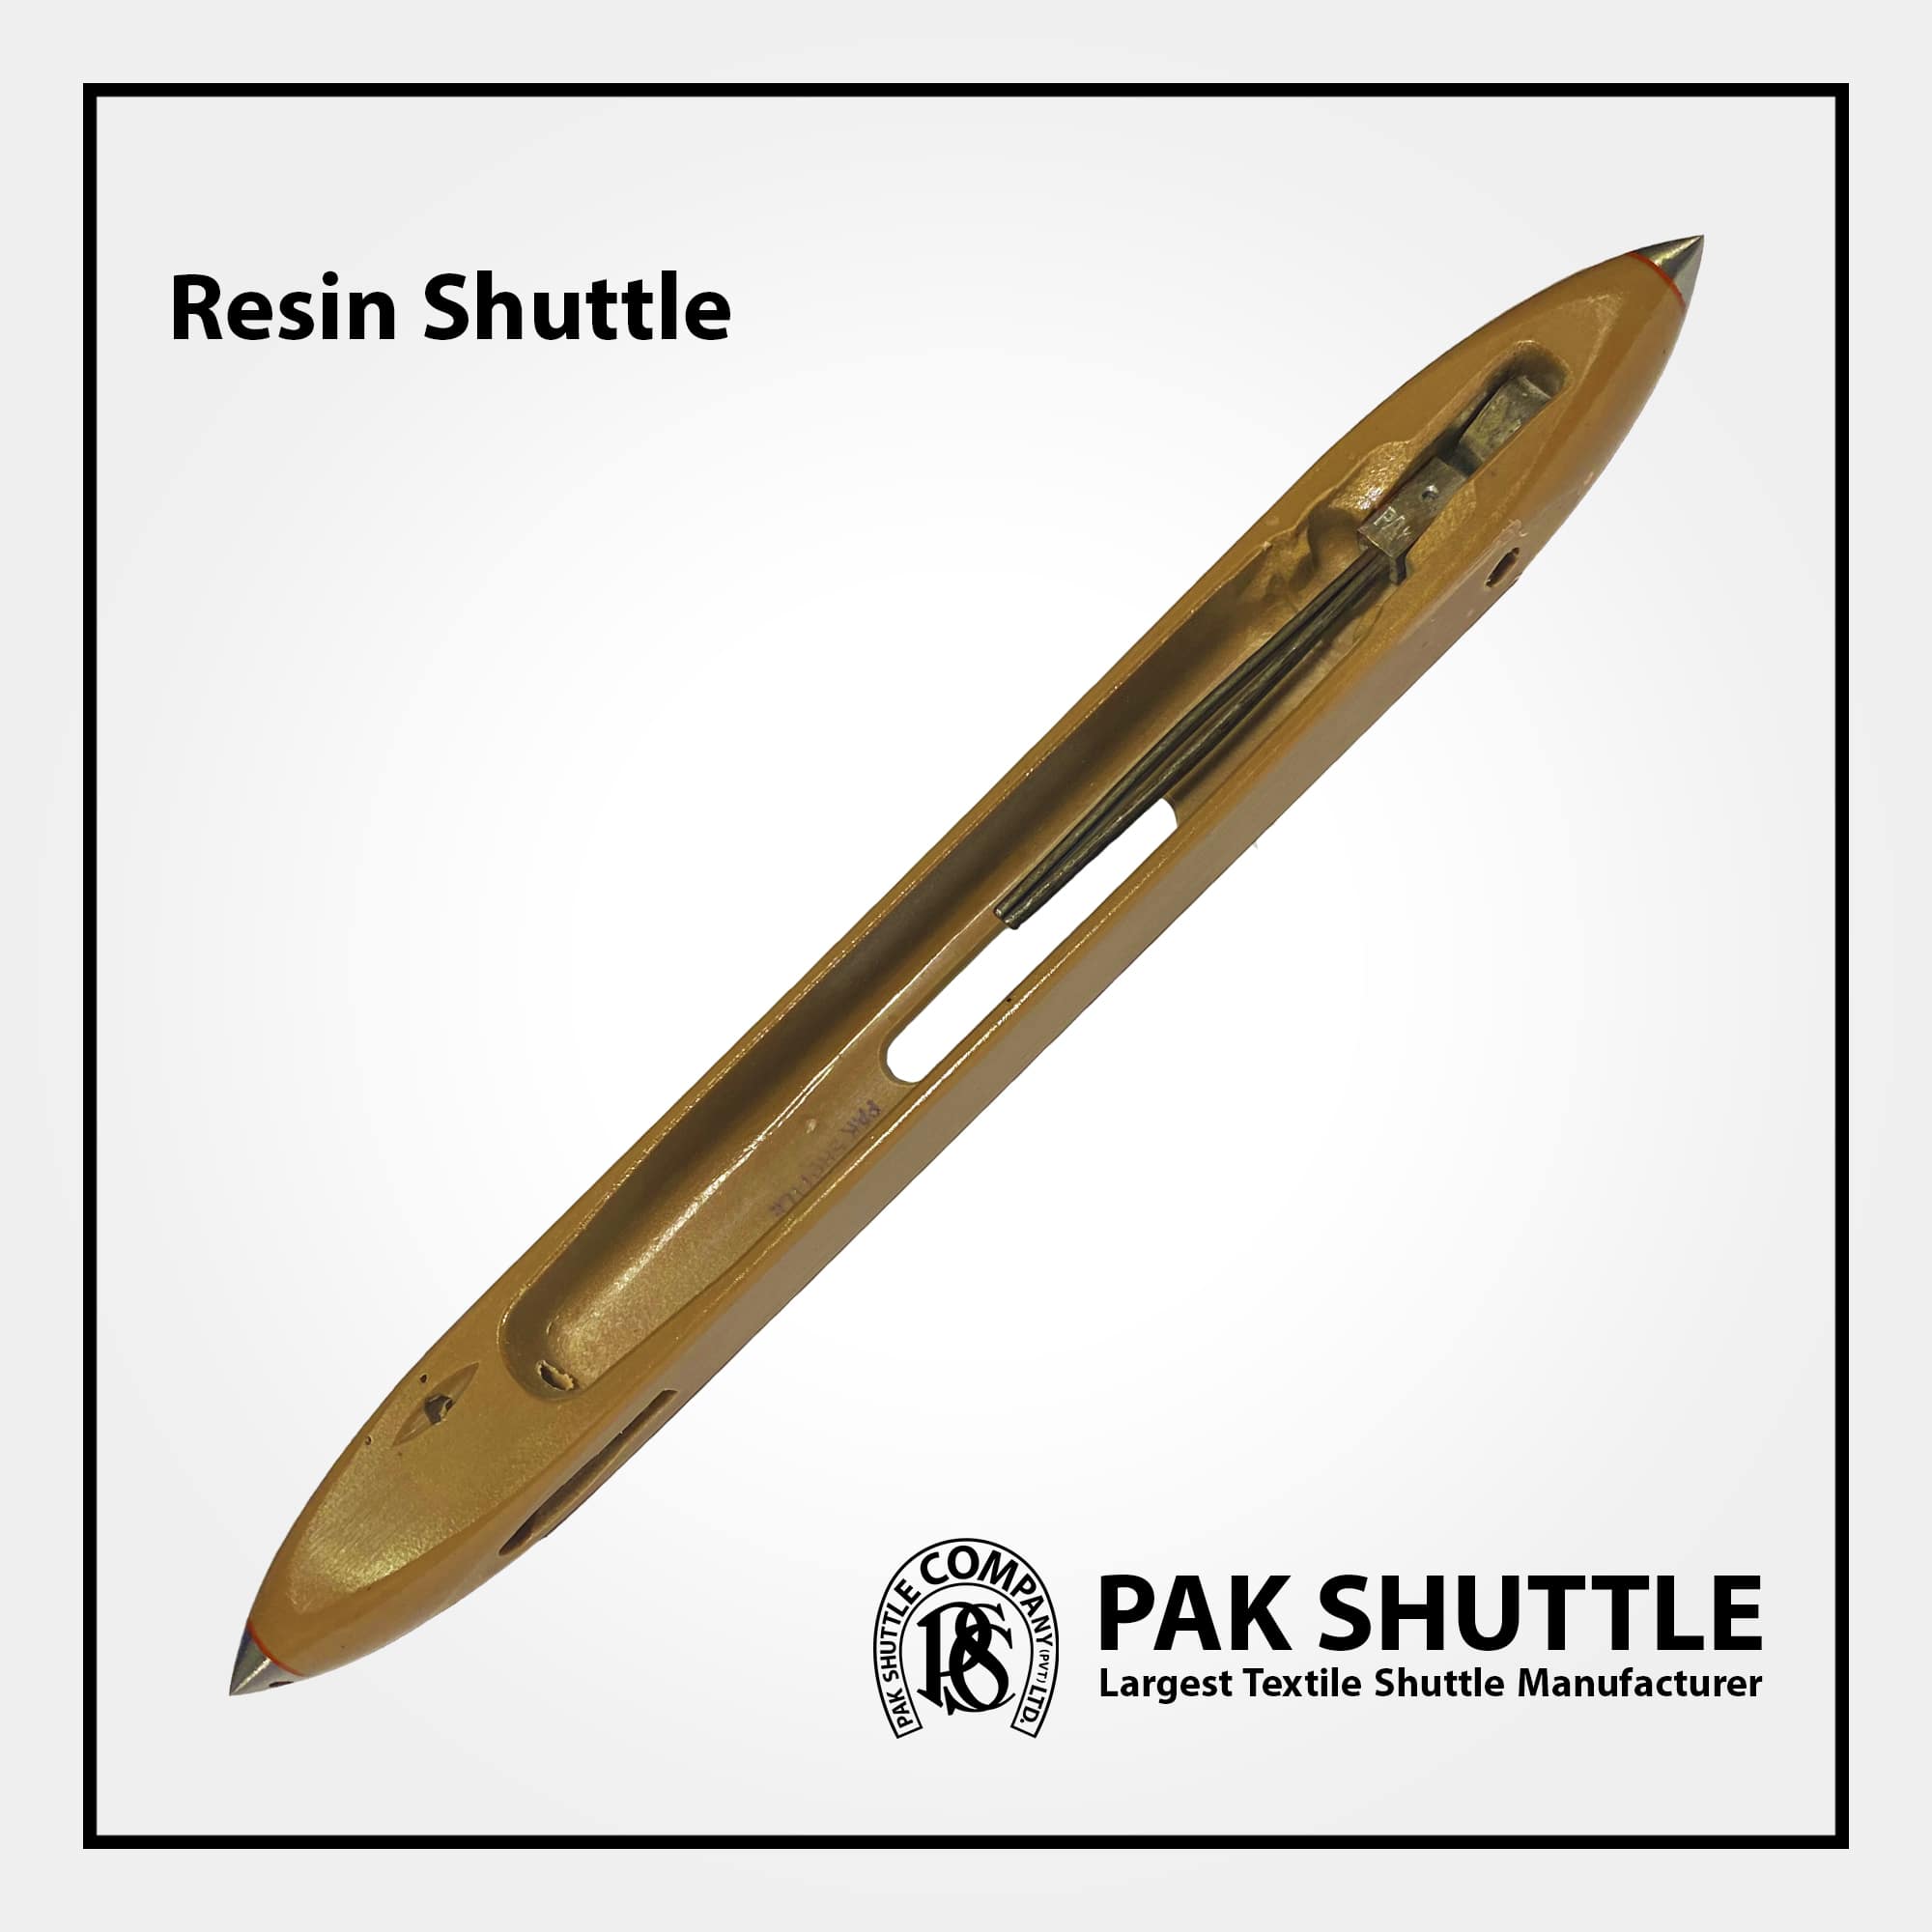 Resin Shuttle by Pak Shuttle Company Pvt Ltd.